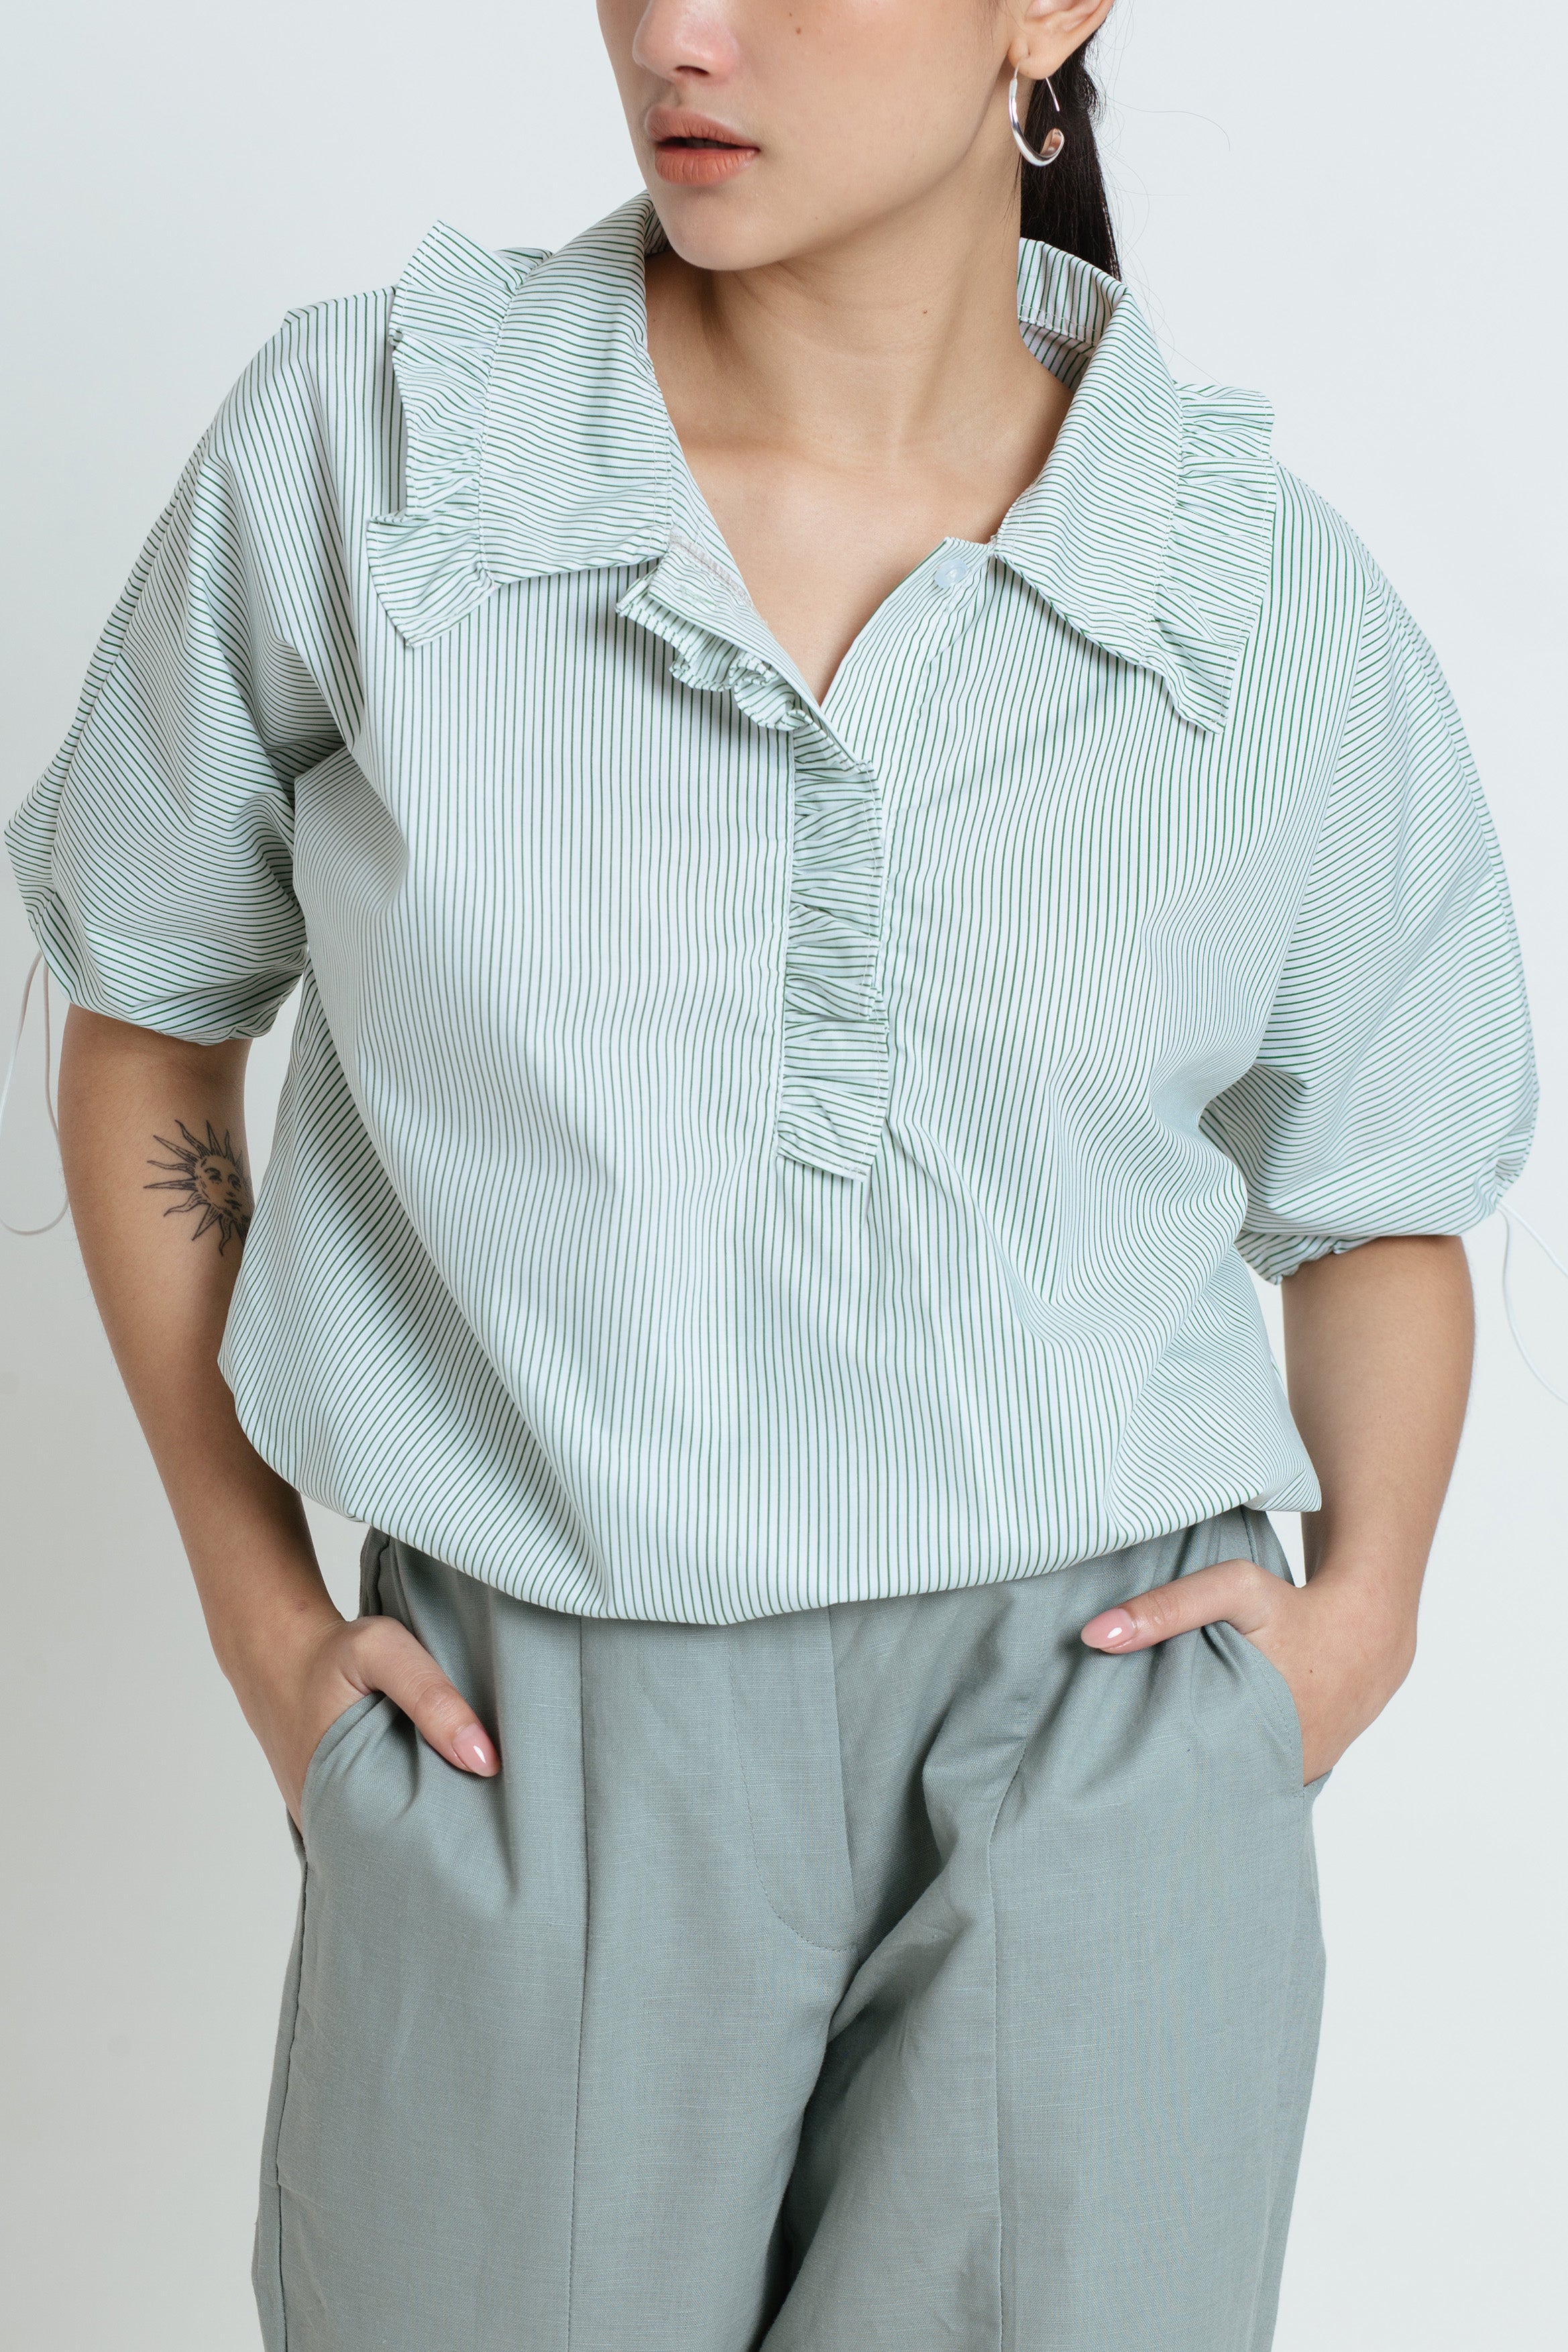 Yoona Shirt in Stripes Green (Left 2SM,2ML)